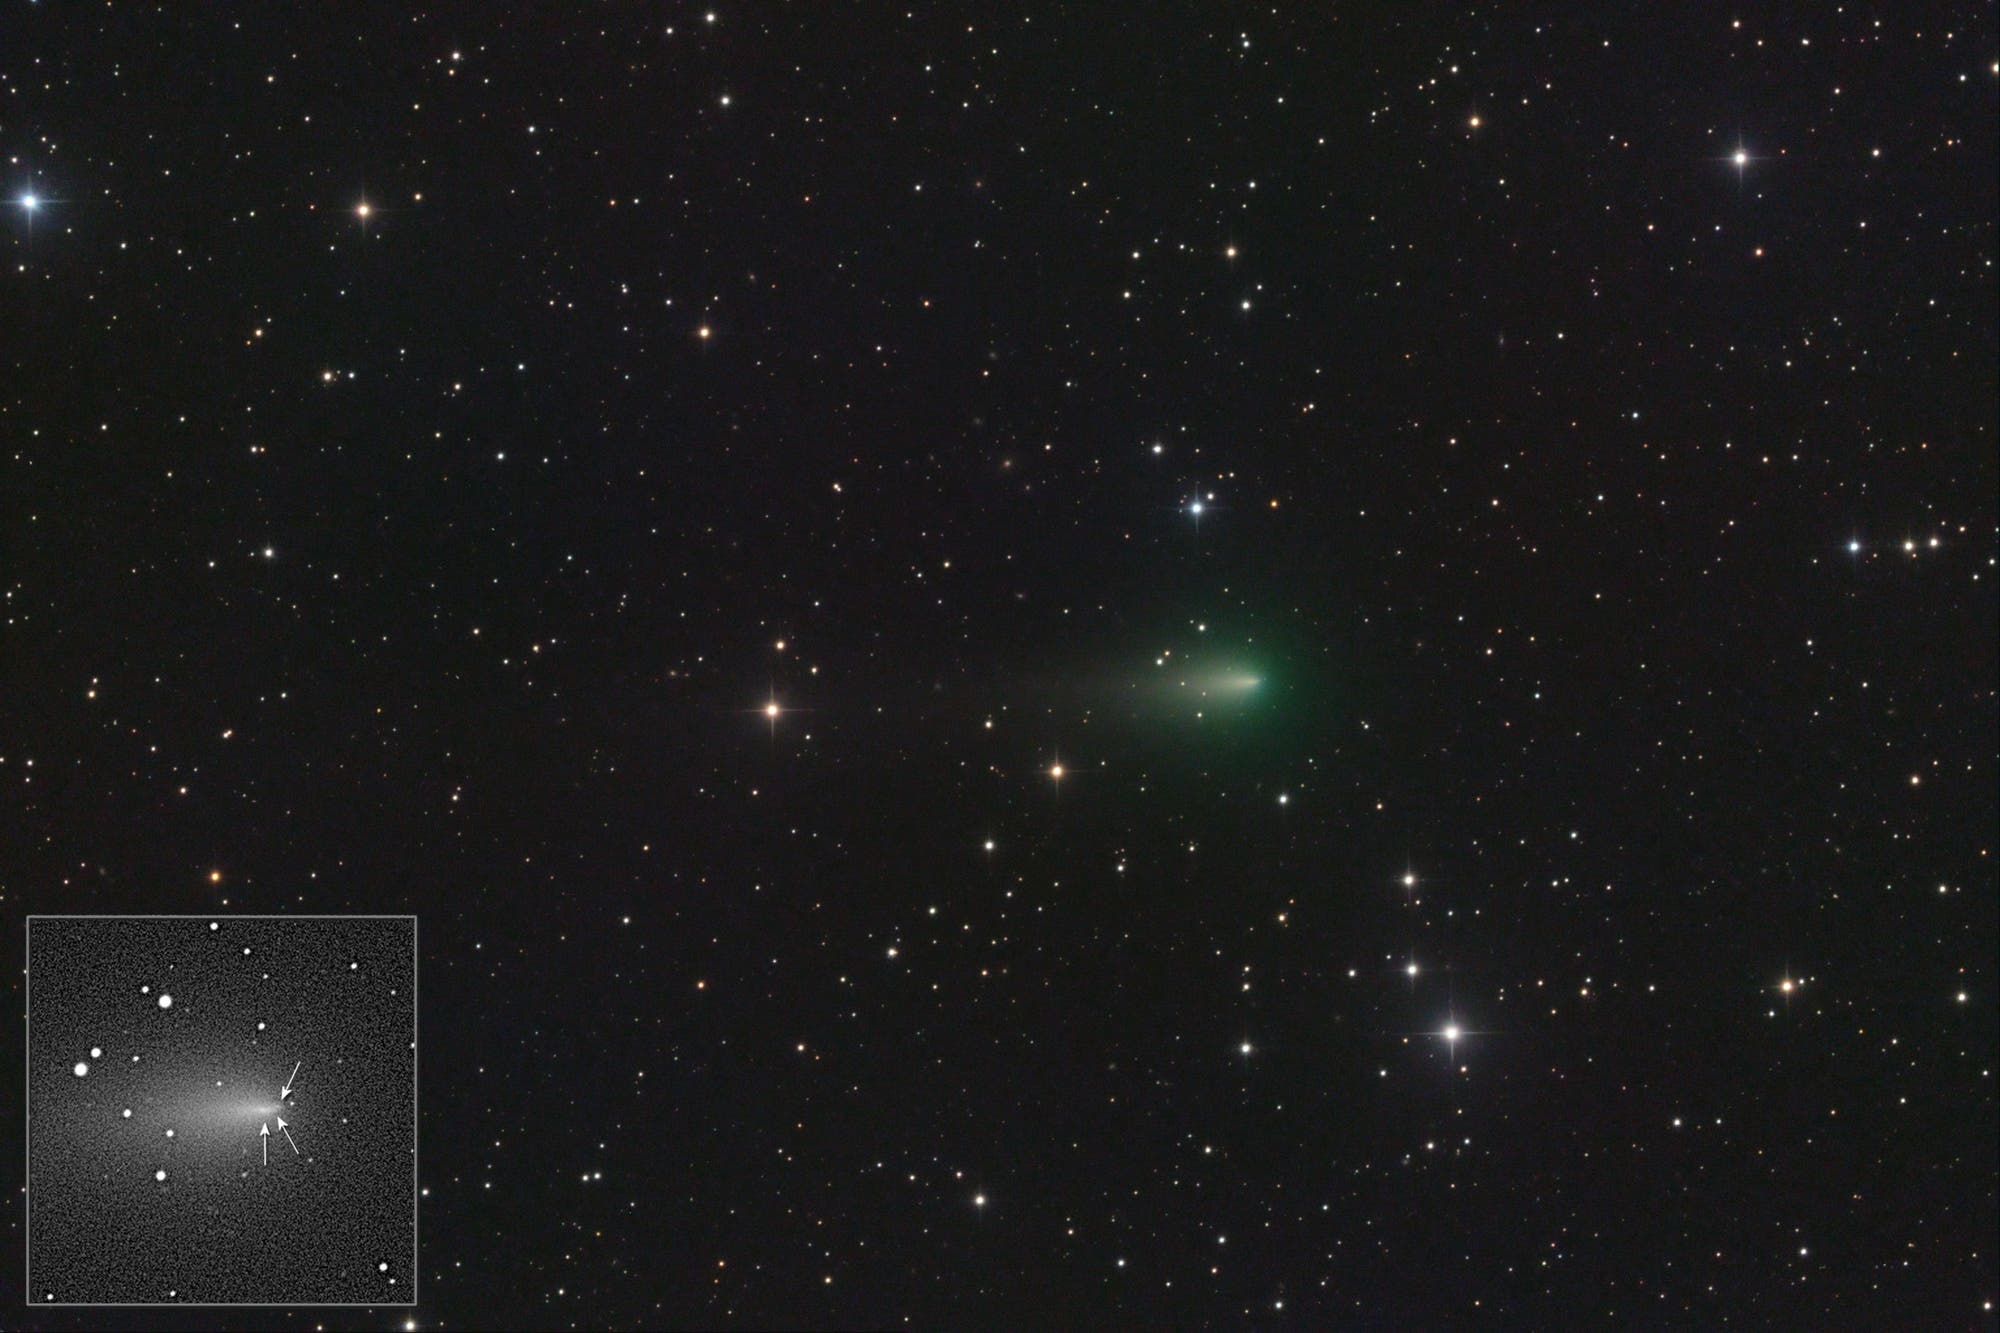 Comet C/2019 Y4 ATLAS splits